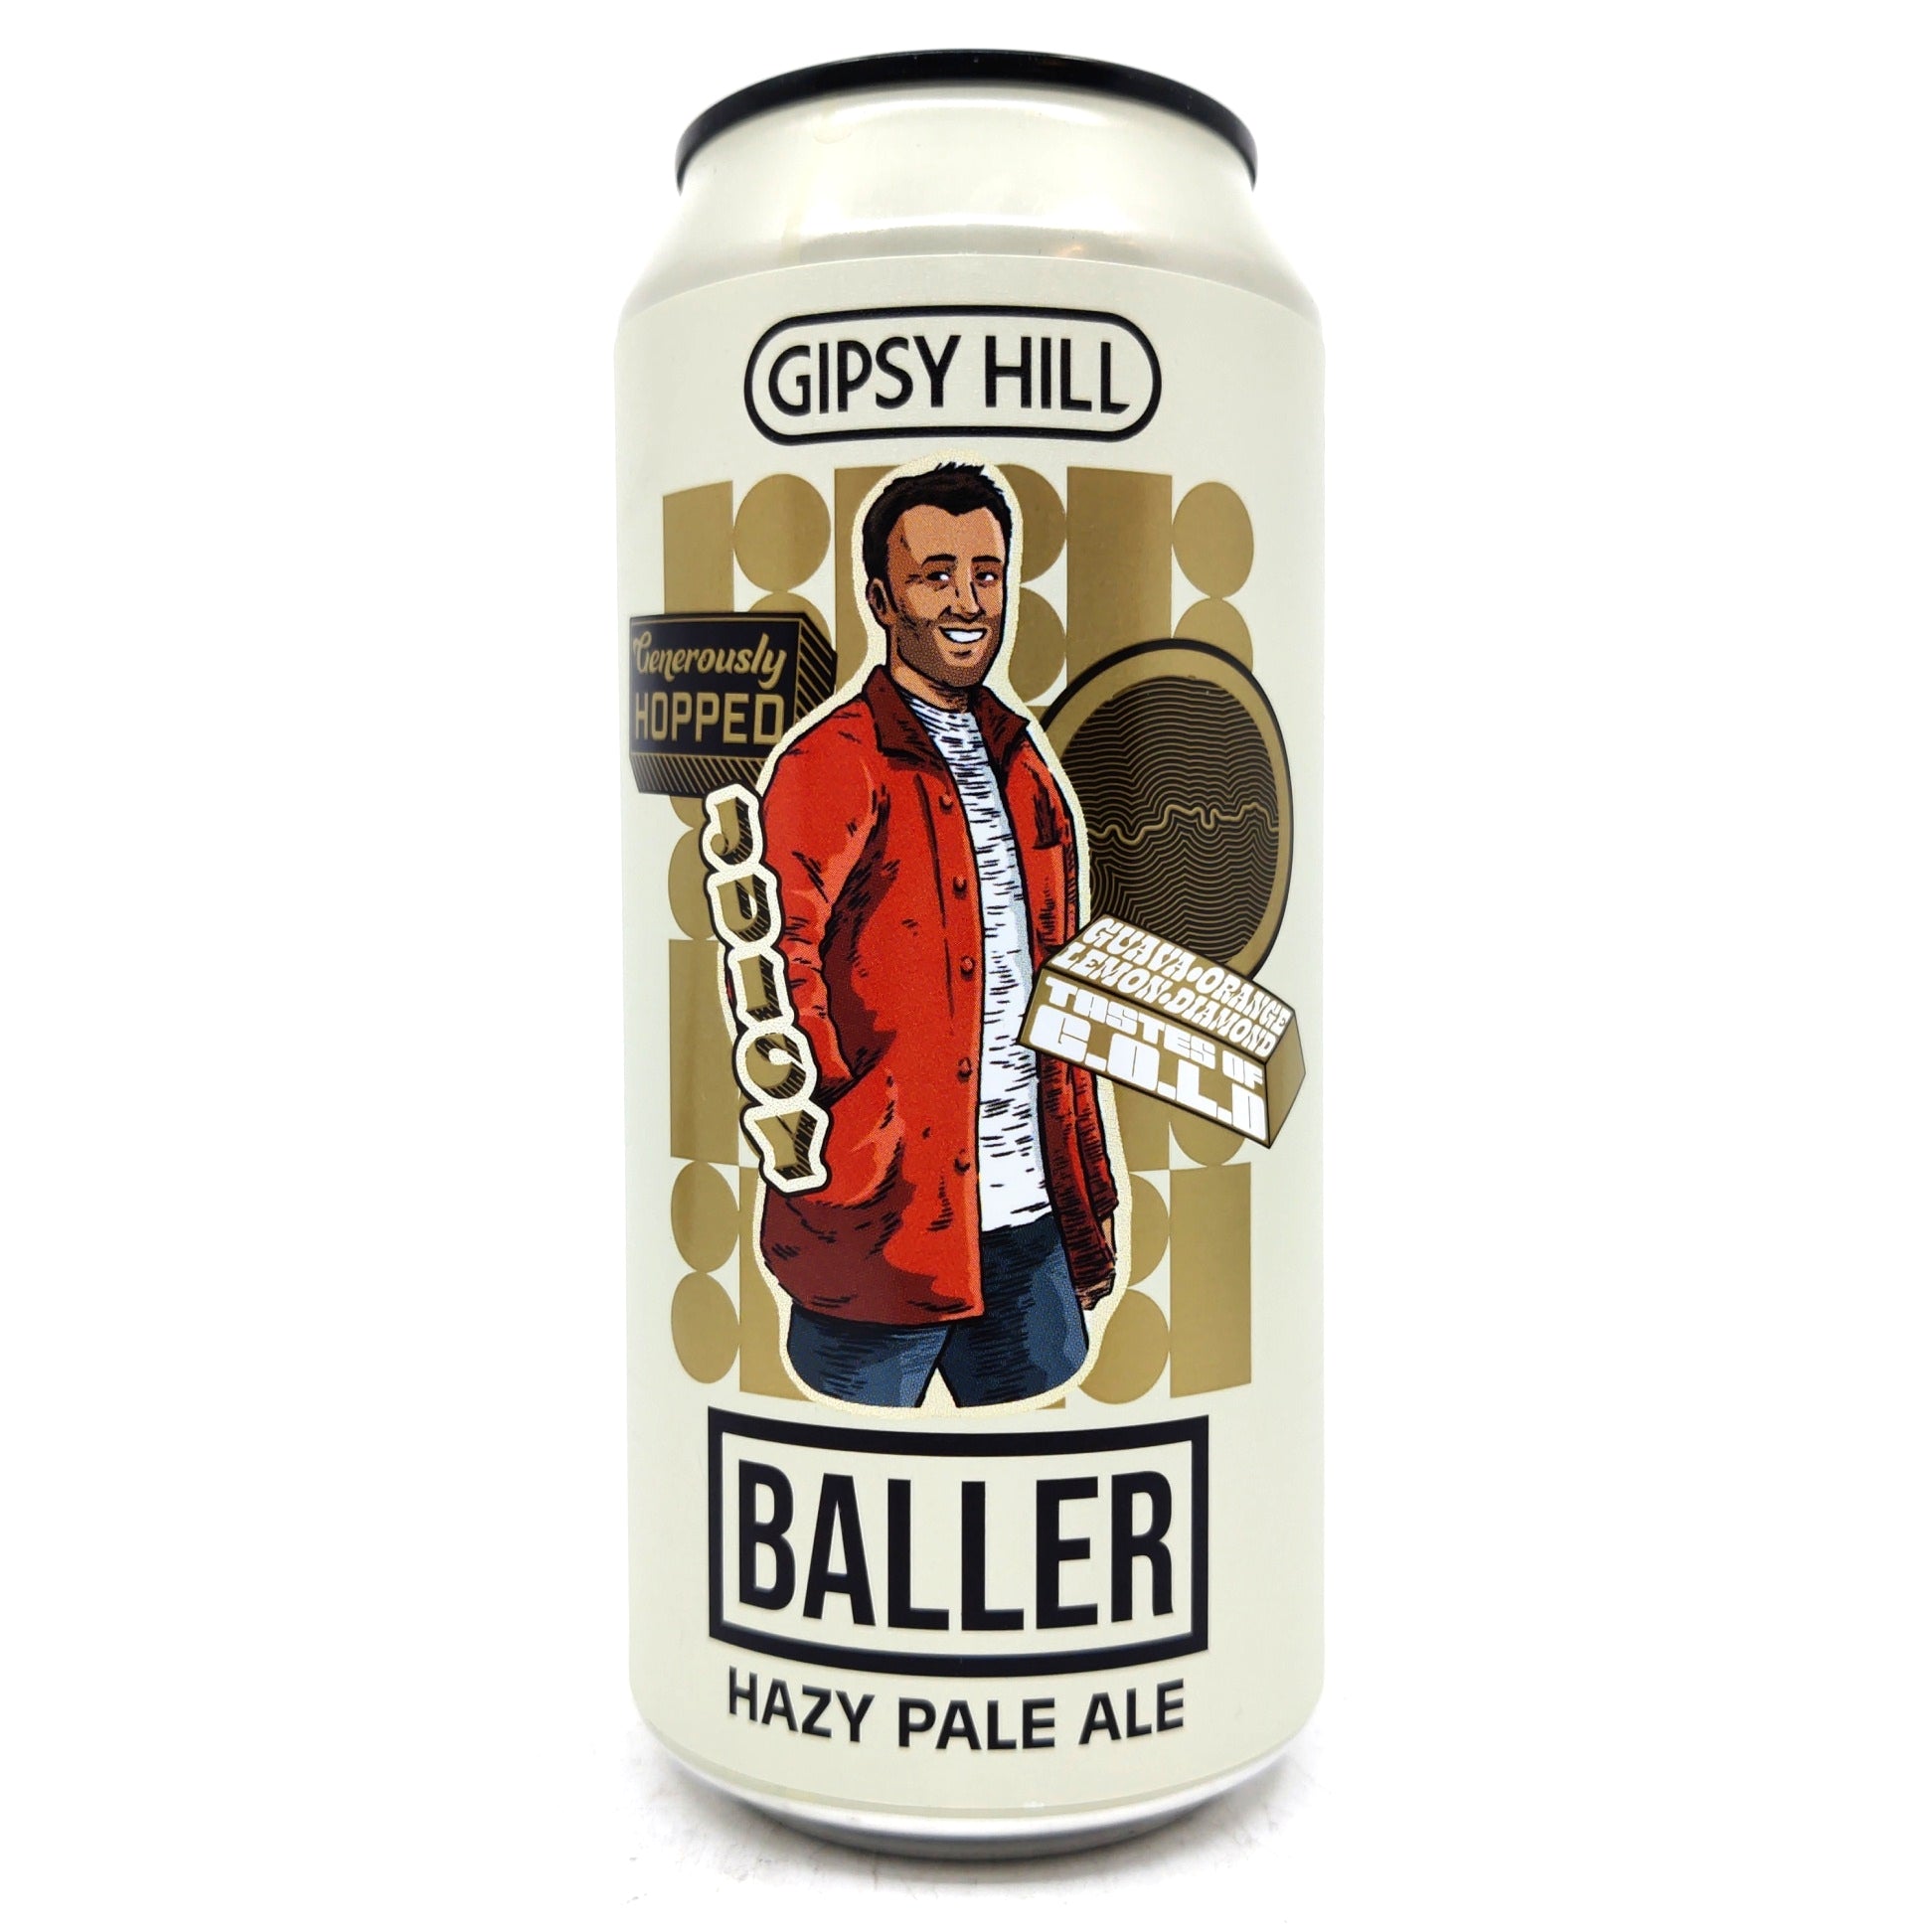 Gipsy Hill Baller Hazy Pale Ale 5.4% (440ml can)-Hop Burns & Black